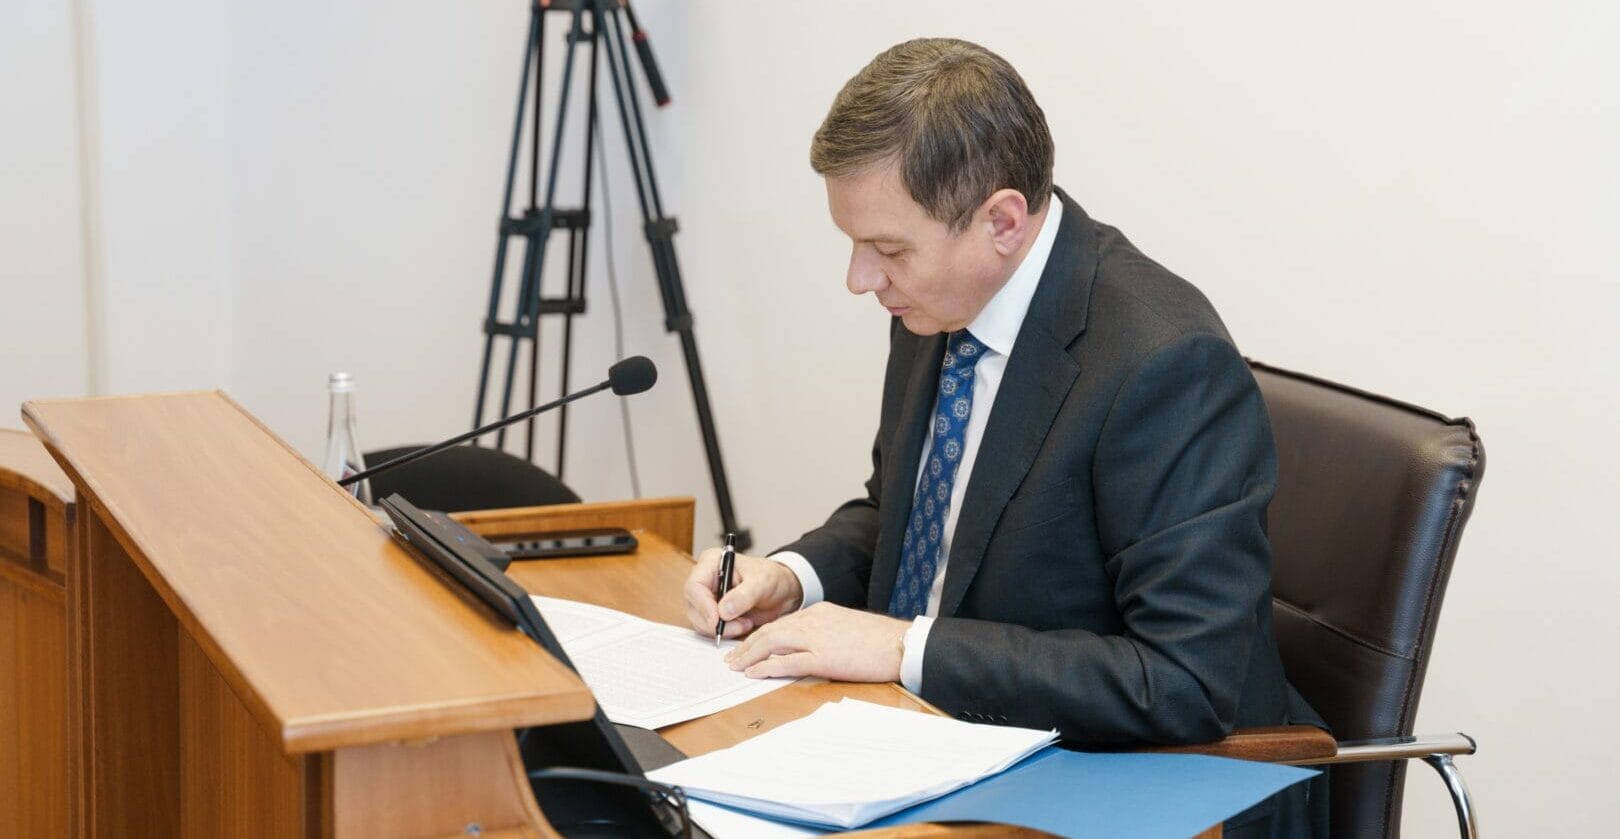 Vinnytsia Mayor Serhii Morhunov signing the Declaration on the Green Course of Vinnytsia